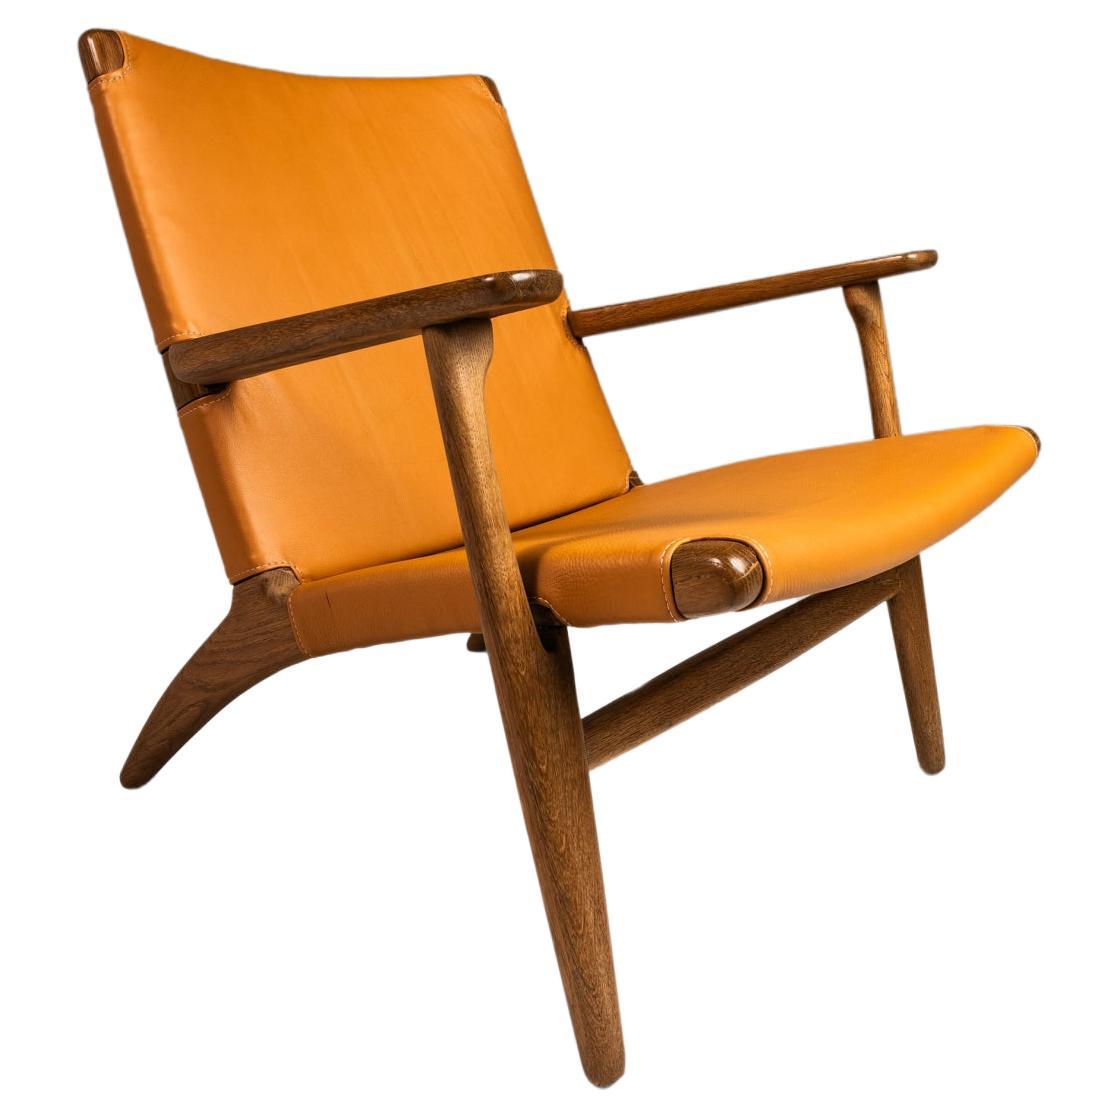  Danish Mid-Century CH 25 Lounge Chair by Hans J. Wegner, Oak & Leather, c. 1950 For Sale